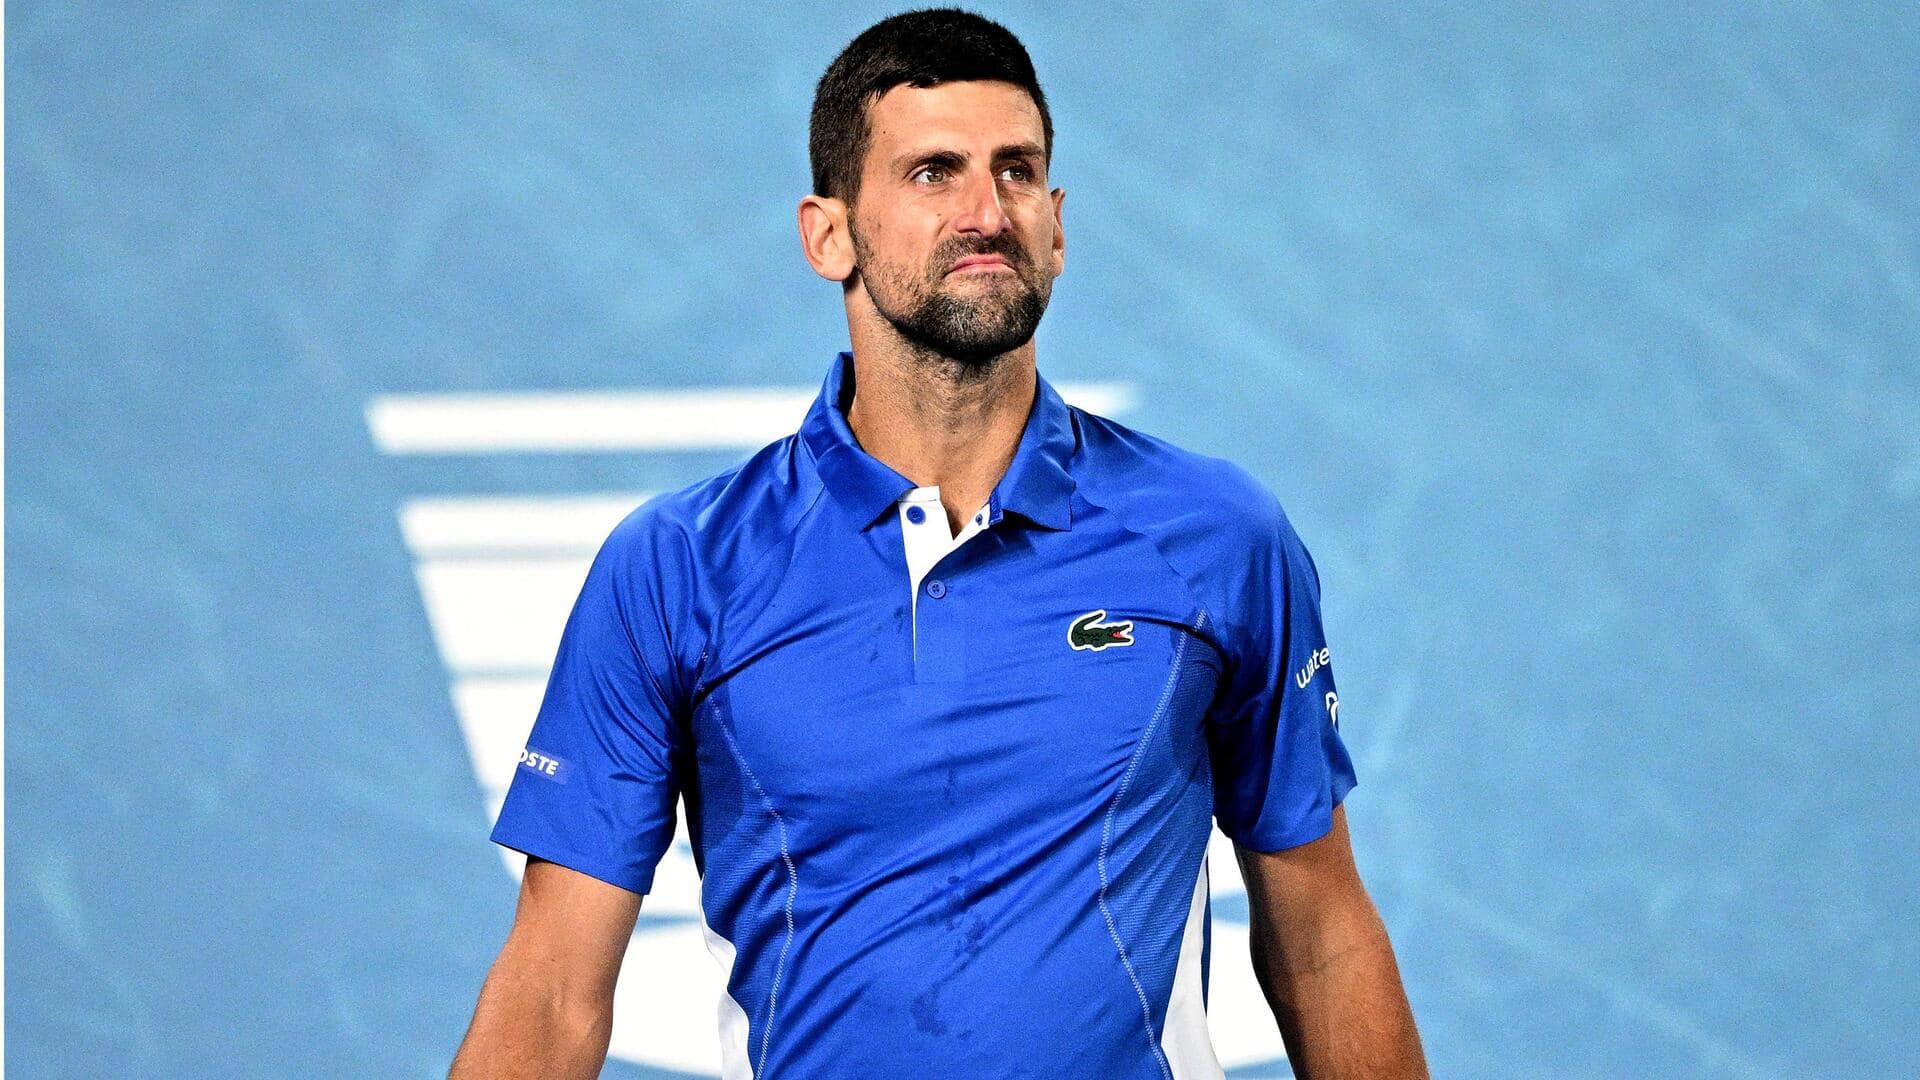 Australian Open: Novak Djokovic wins his 200th hard-court major match